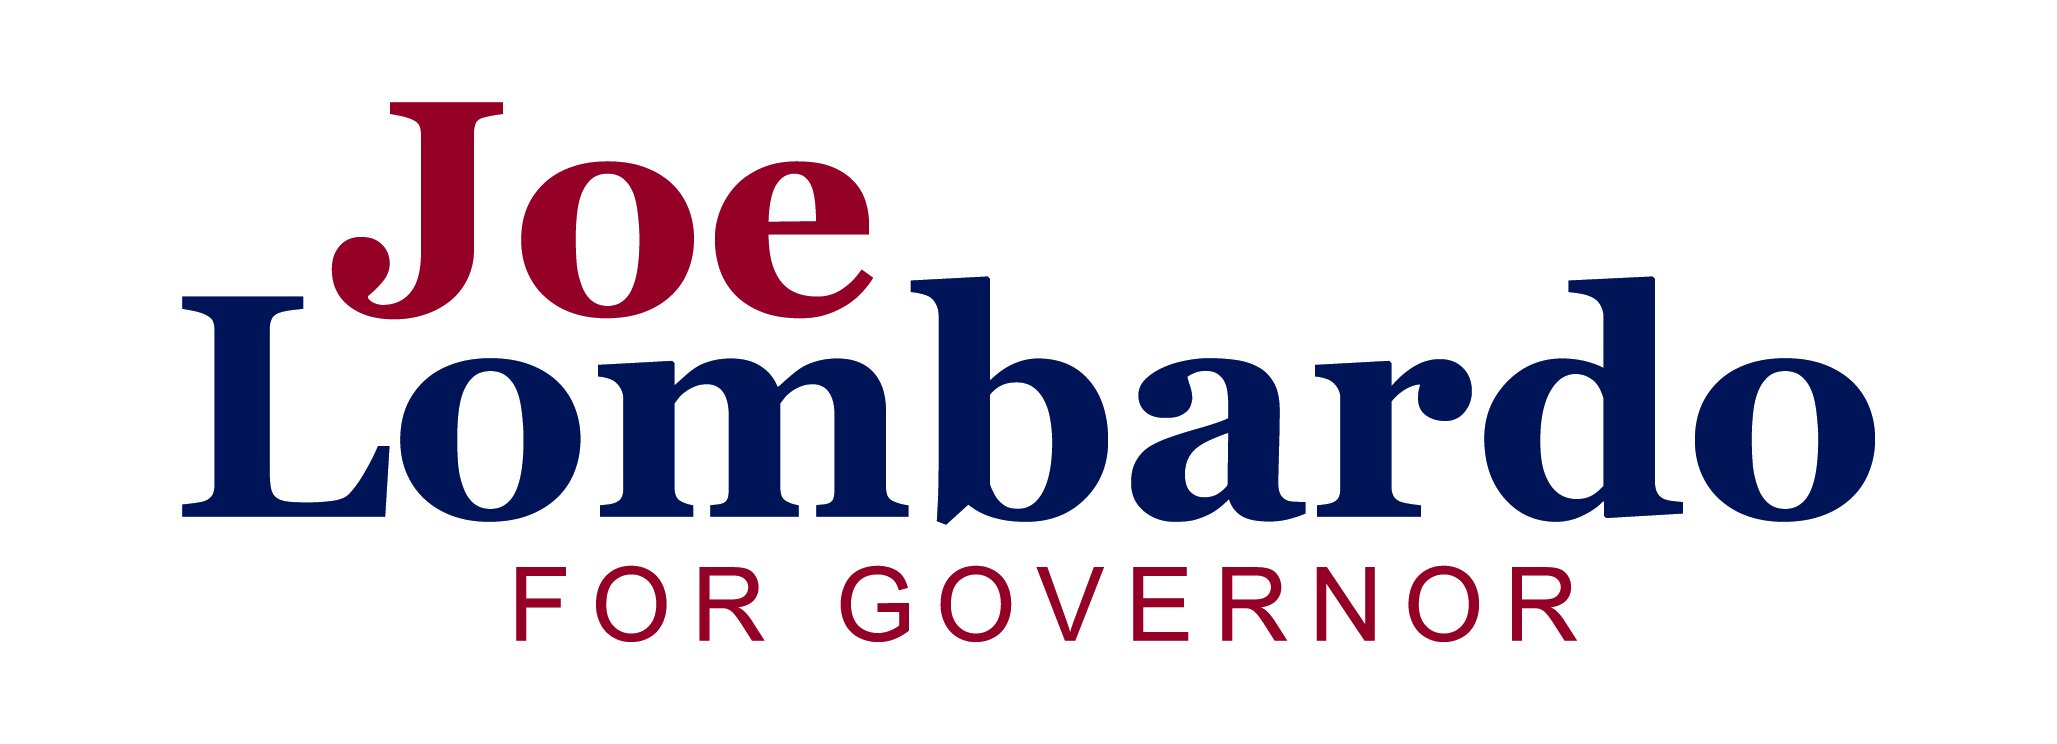 Governor-Elect Lombardo Transition Site